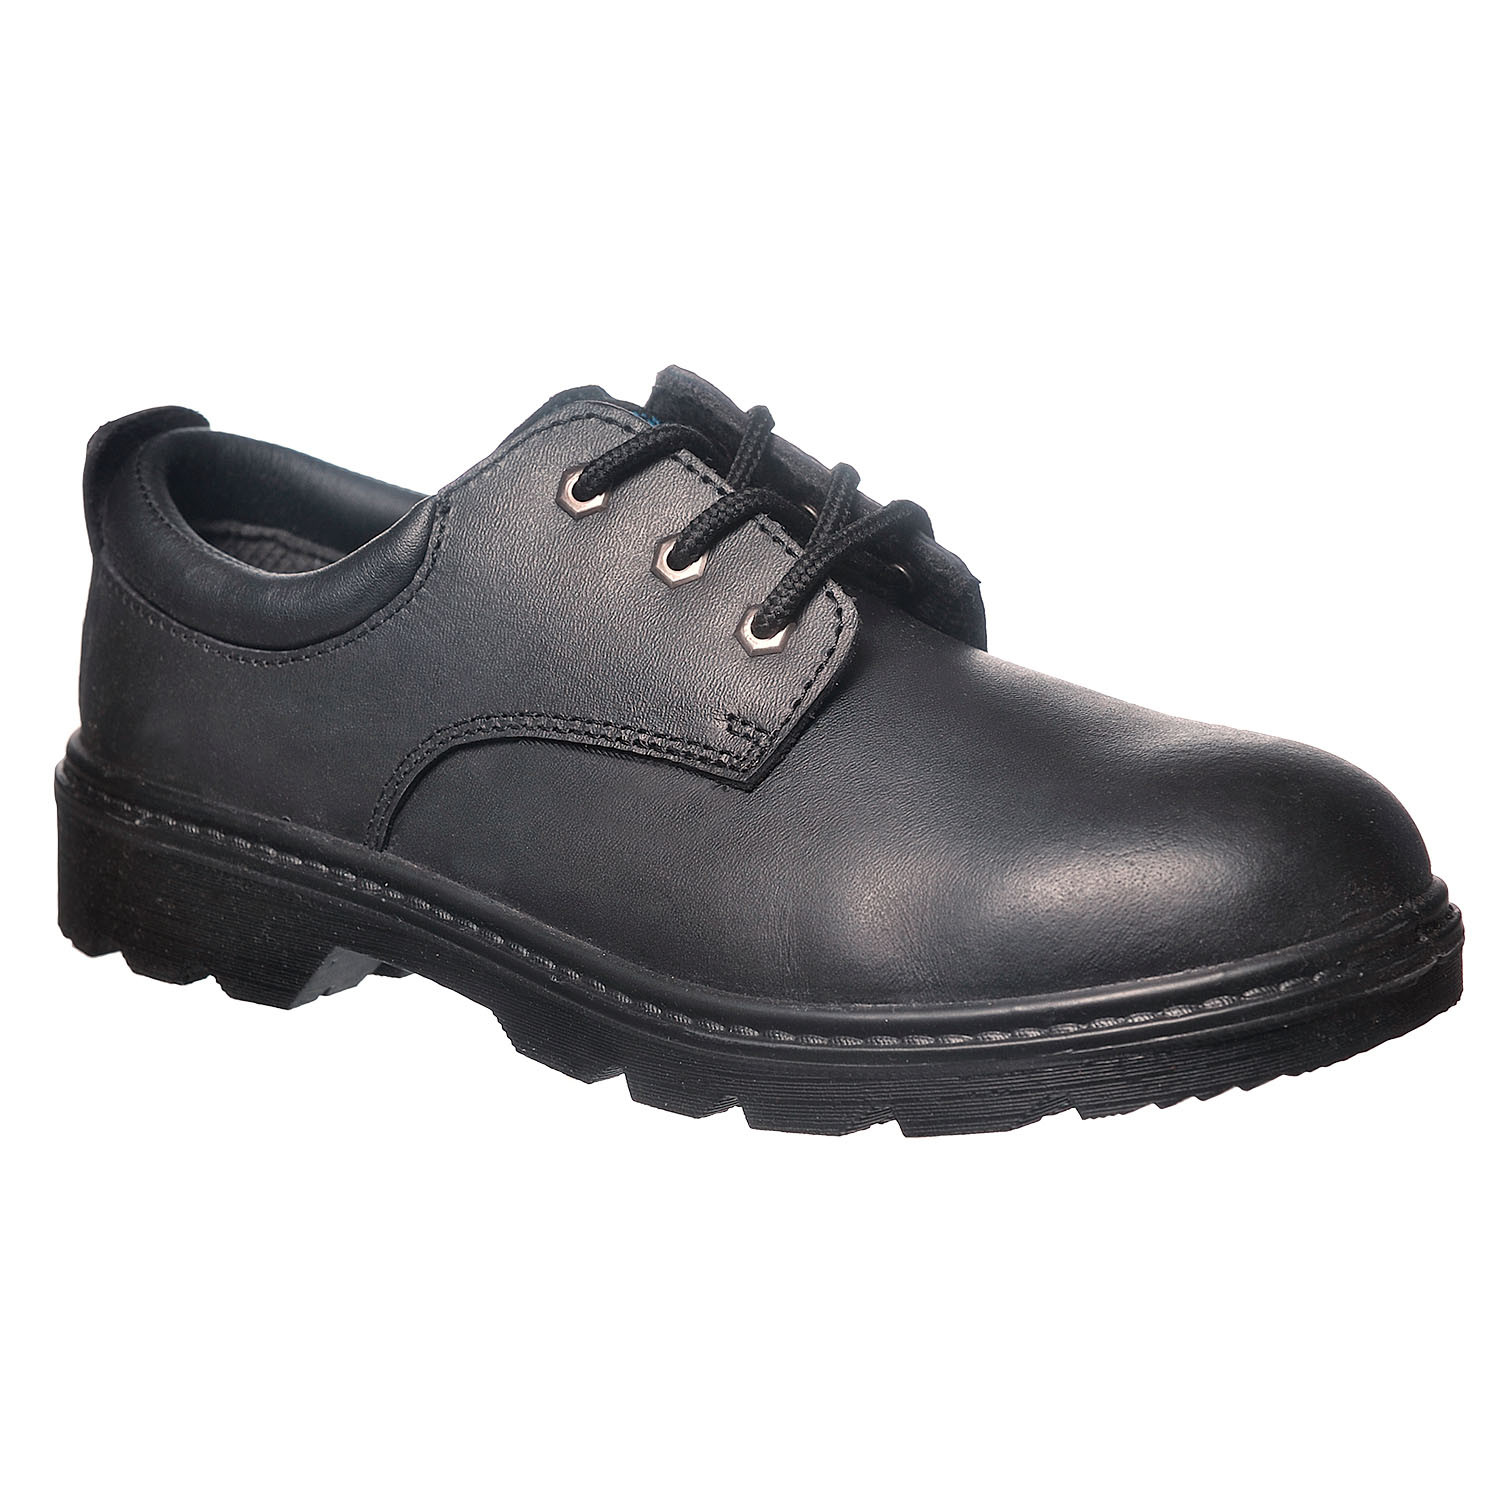 Steelite Thor Shoe S3 FW44 - Safety shoes